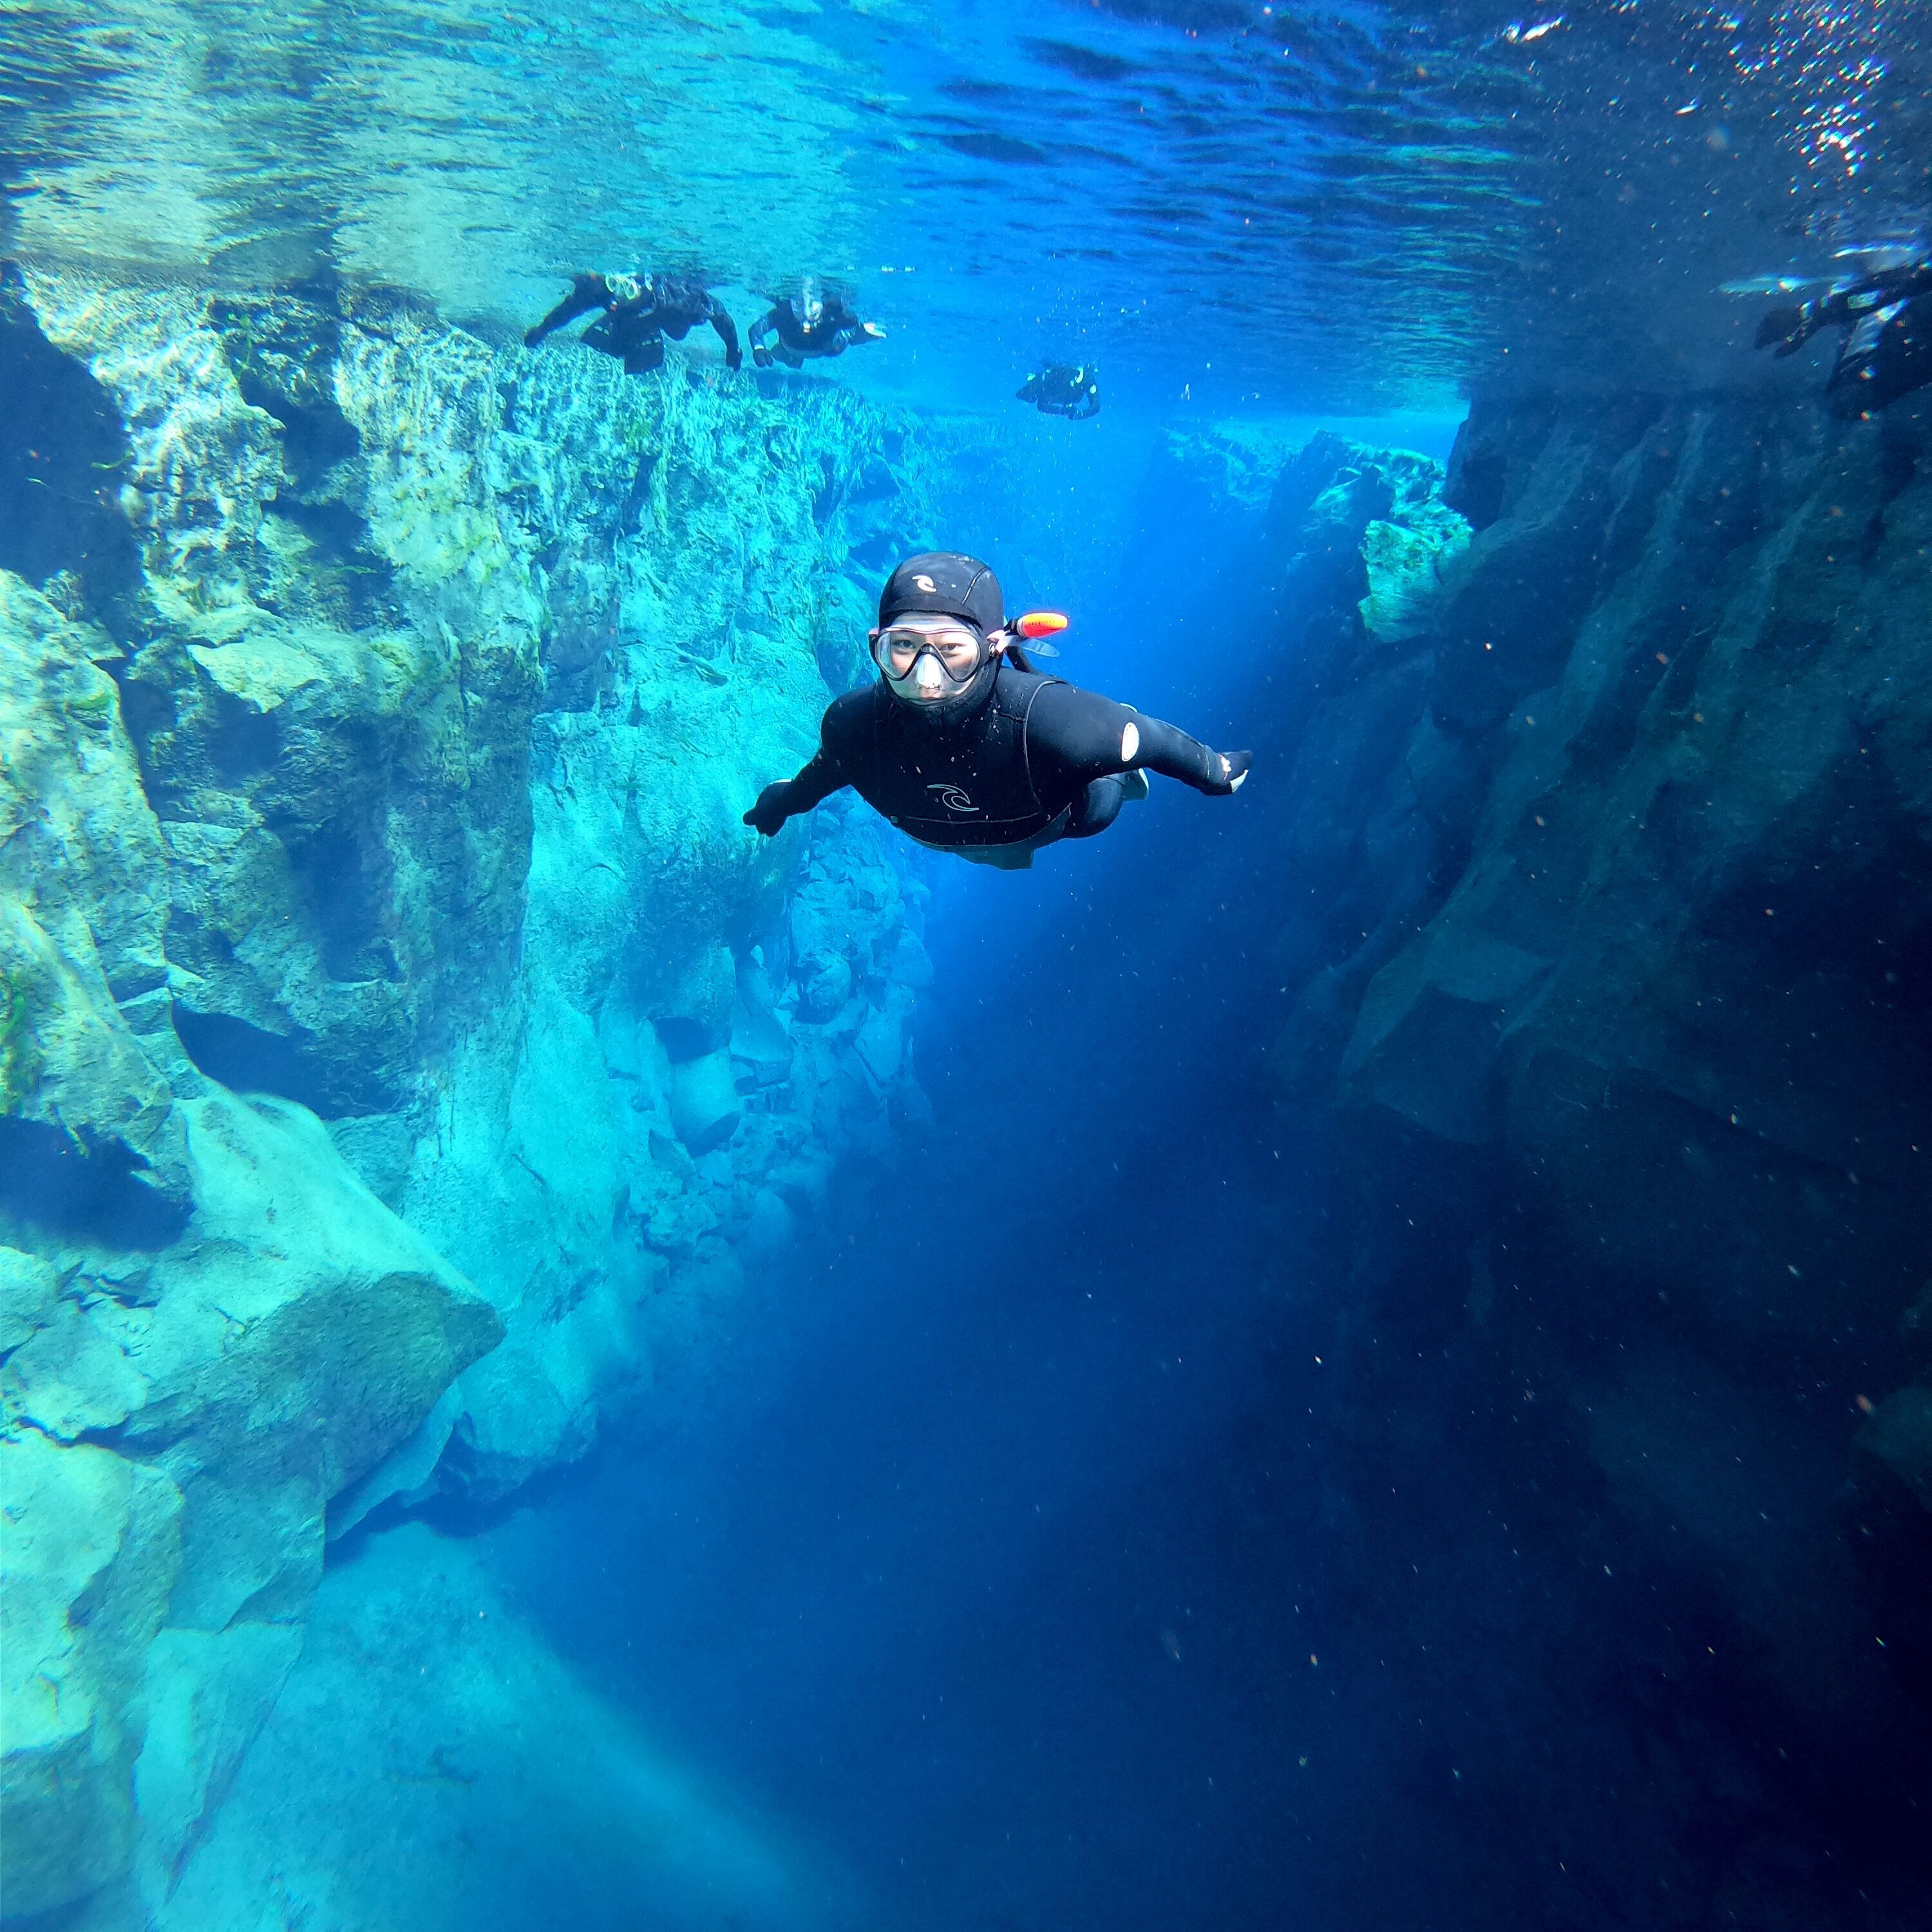 Wetsuit-snorkelavontuur in Silfra met onderwaterfoto's | Transfer inbegrepen